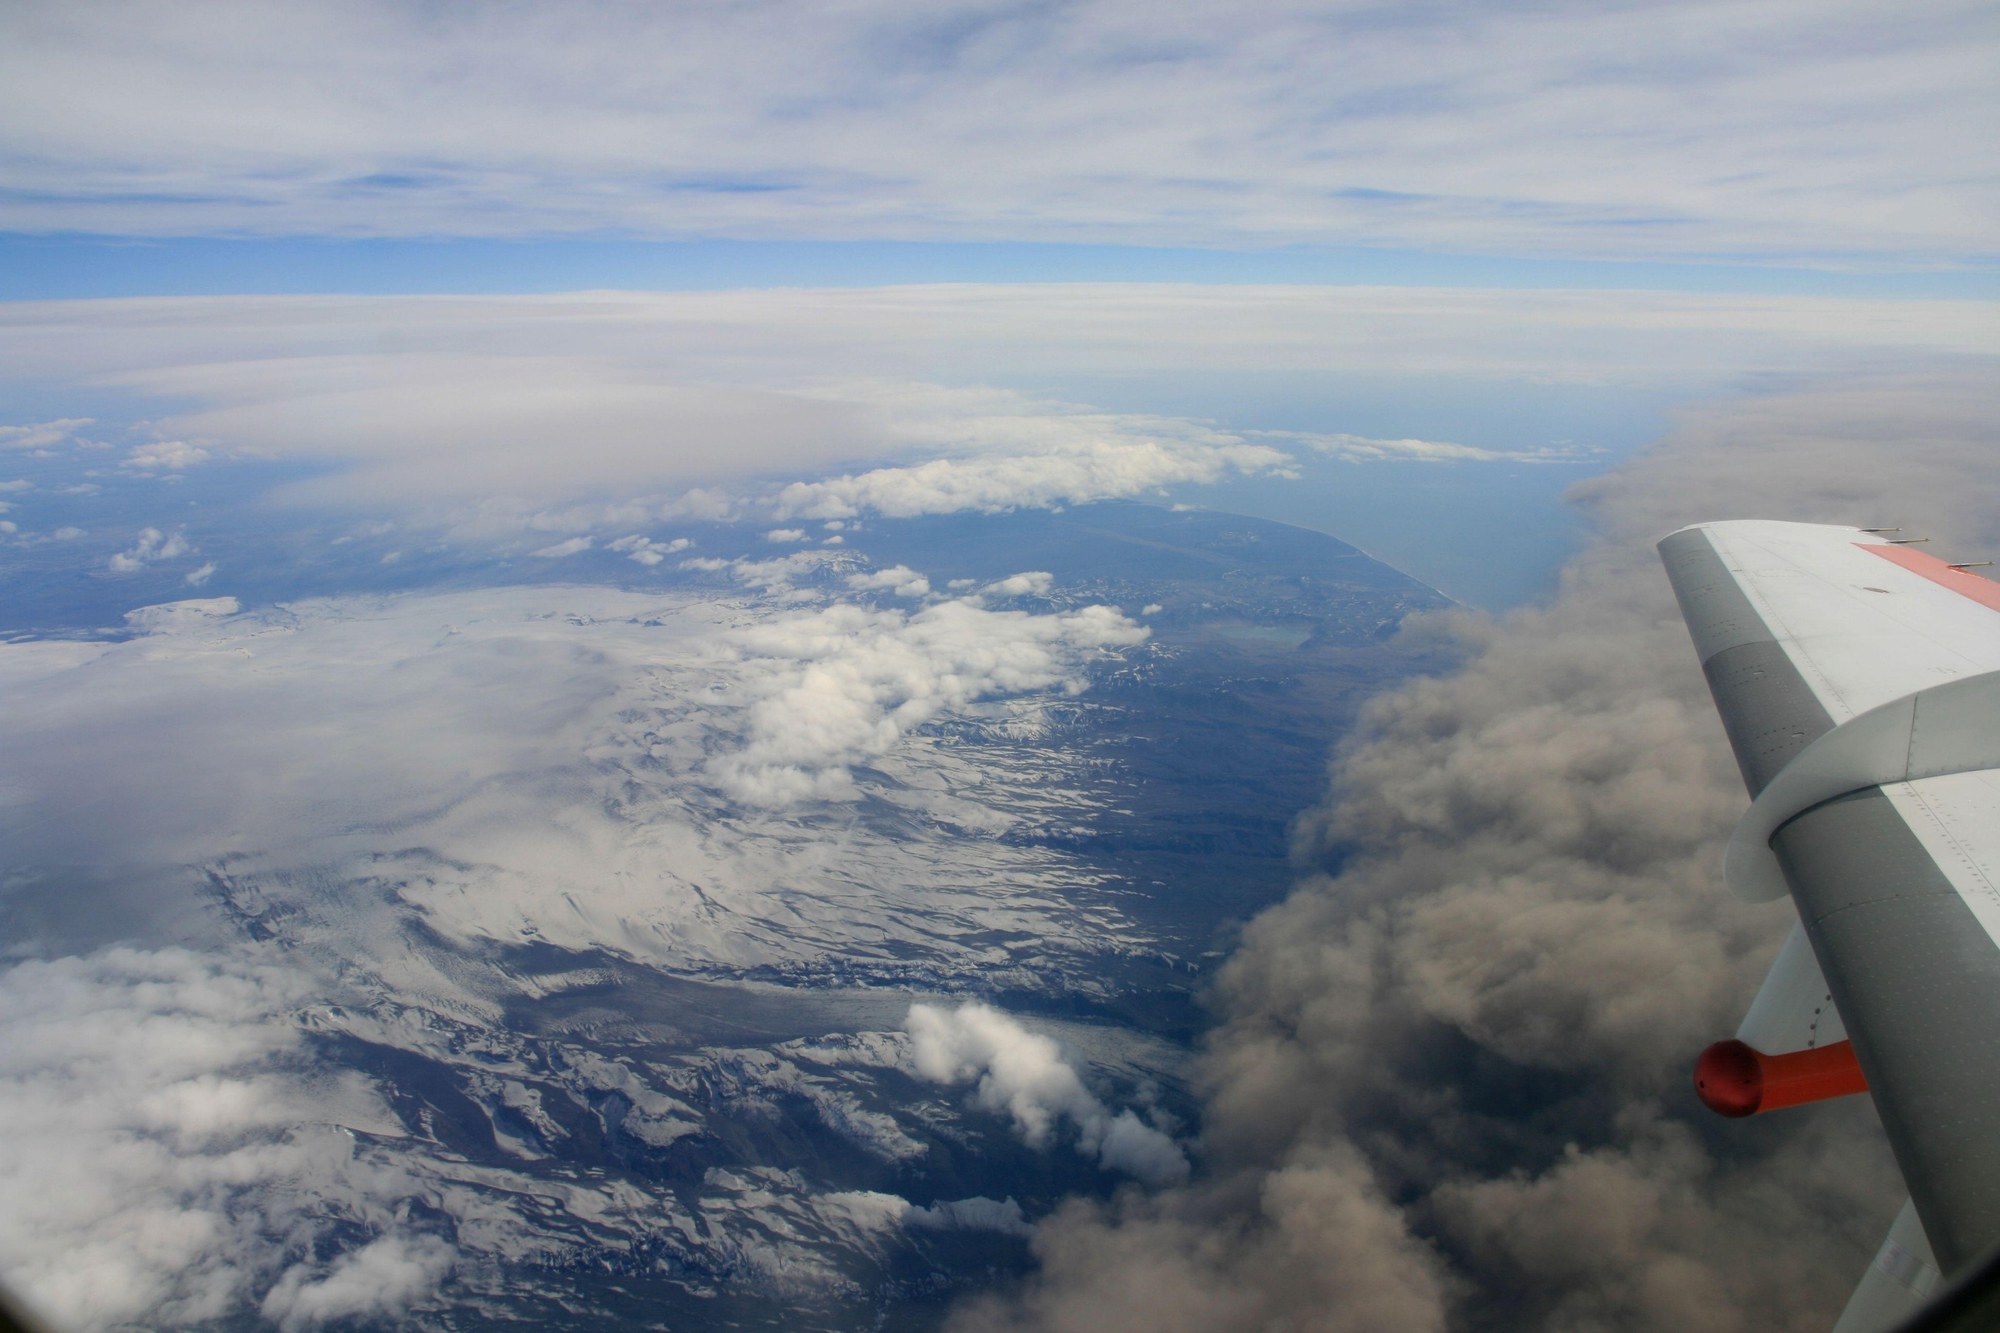 Cloud of volcanic ash